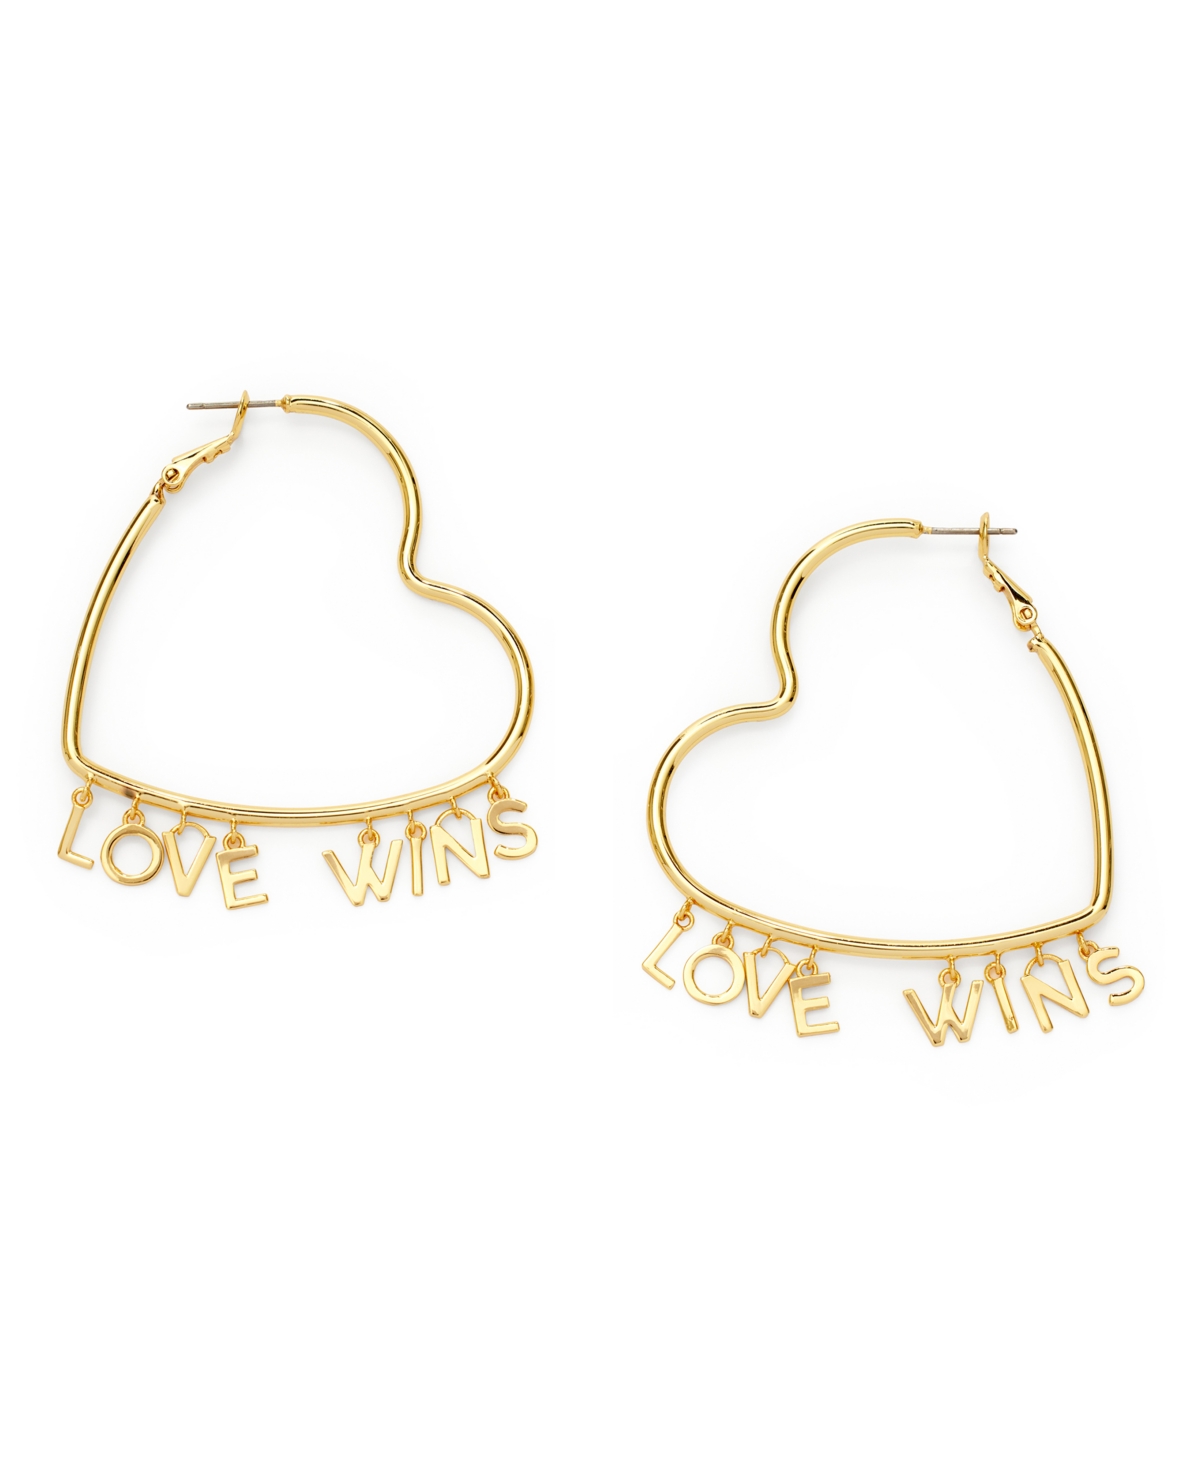 Gold-Tone Love Wins Charm Heart Hoop Earrings - Gold